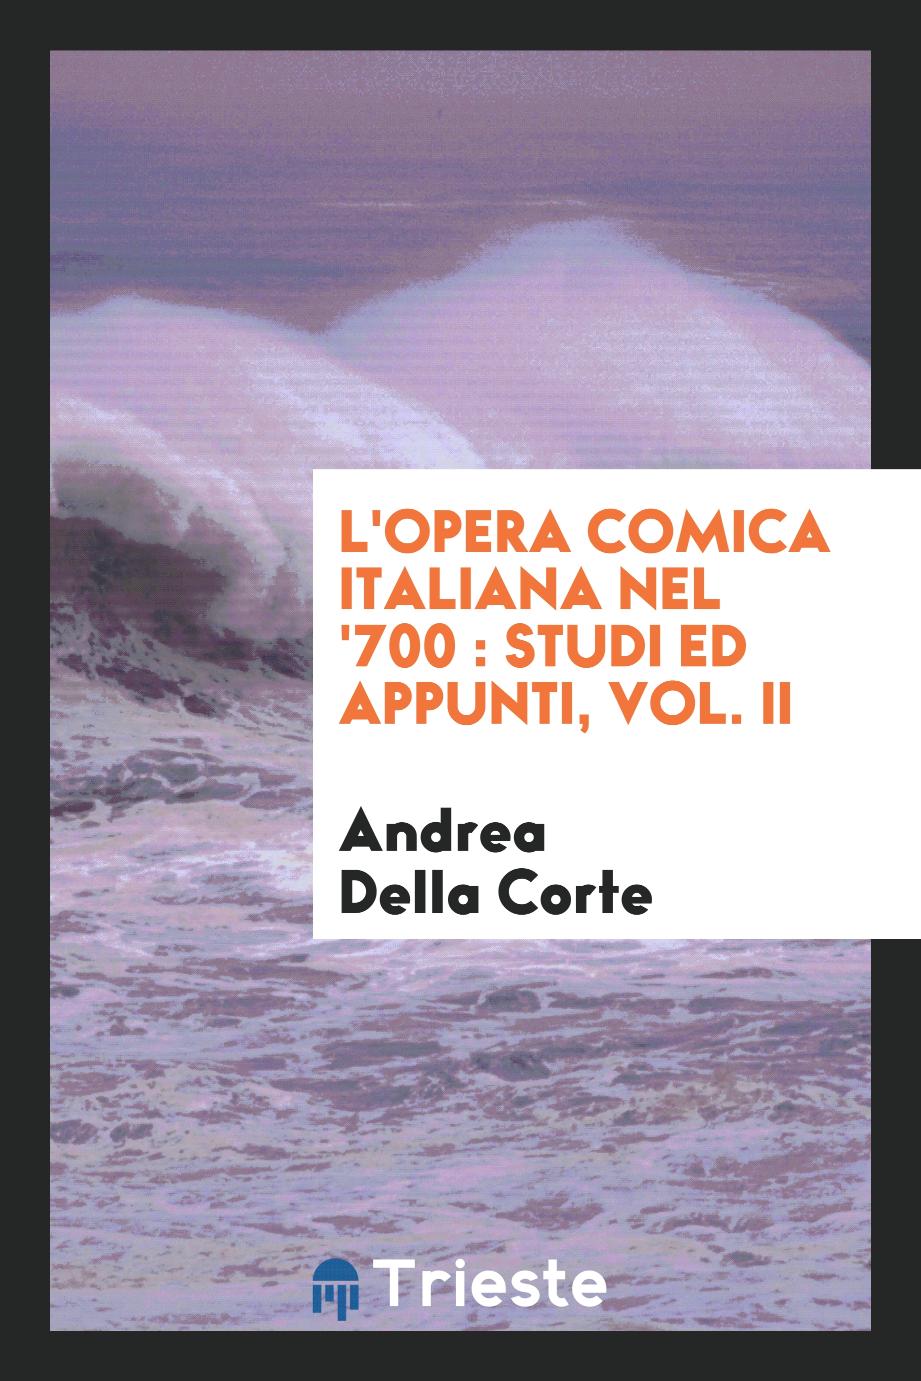 L'opera comica italiana nel '700 : studi ed appunti, Vol. II